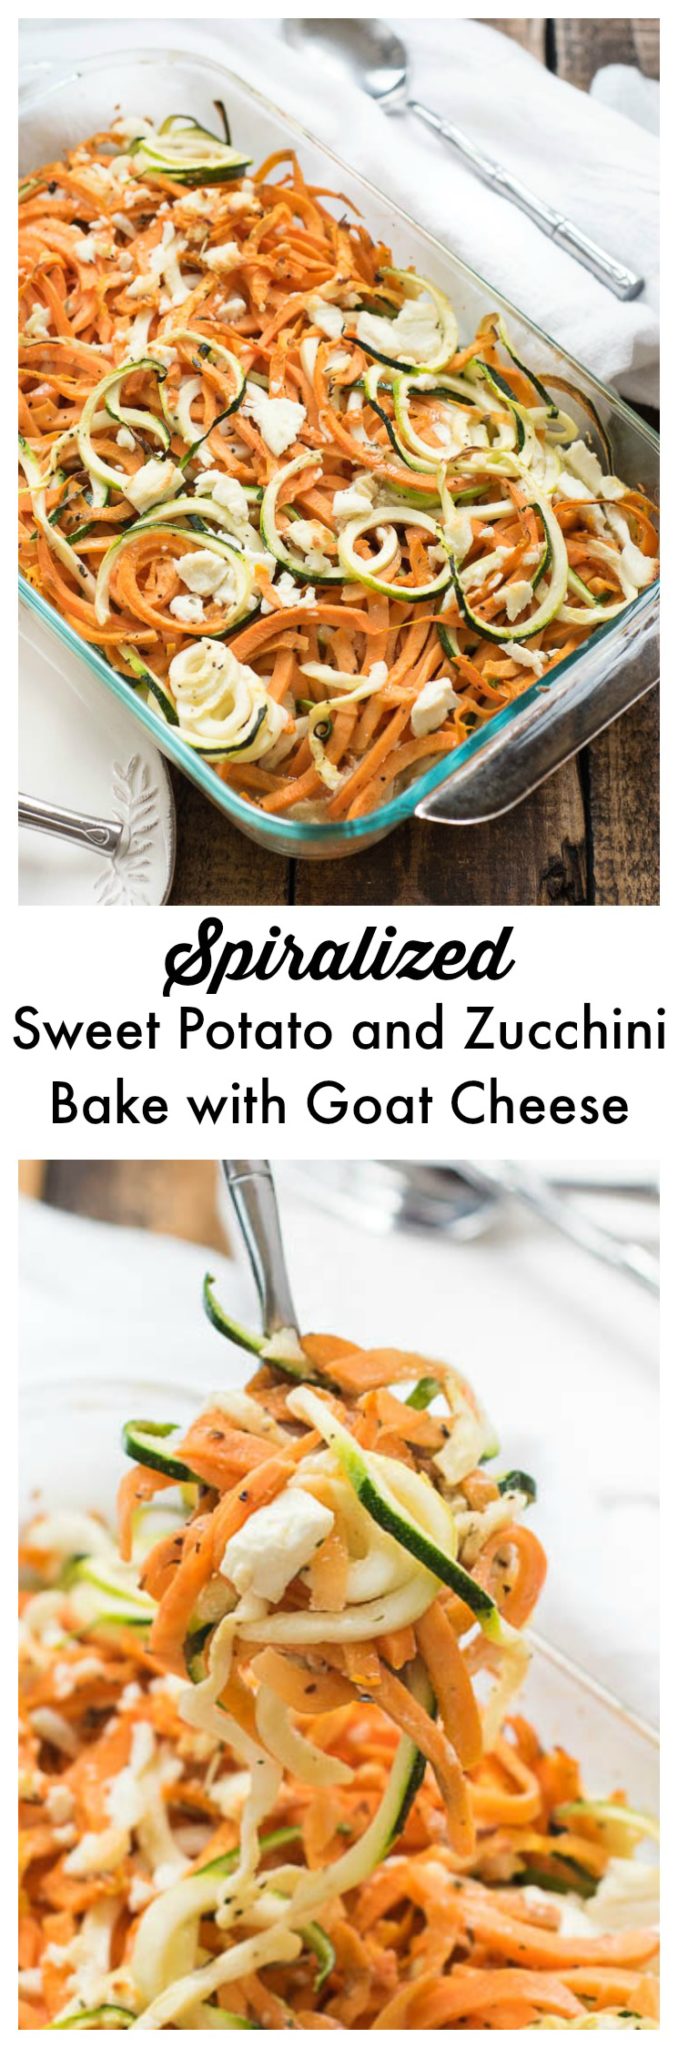 http://www.nutritiouseats.com/wp-content/uploads/2016/09/Spiralized-Sweet-Potato-and-Zucchini-Bake.jpg